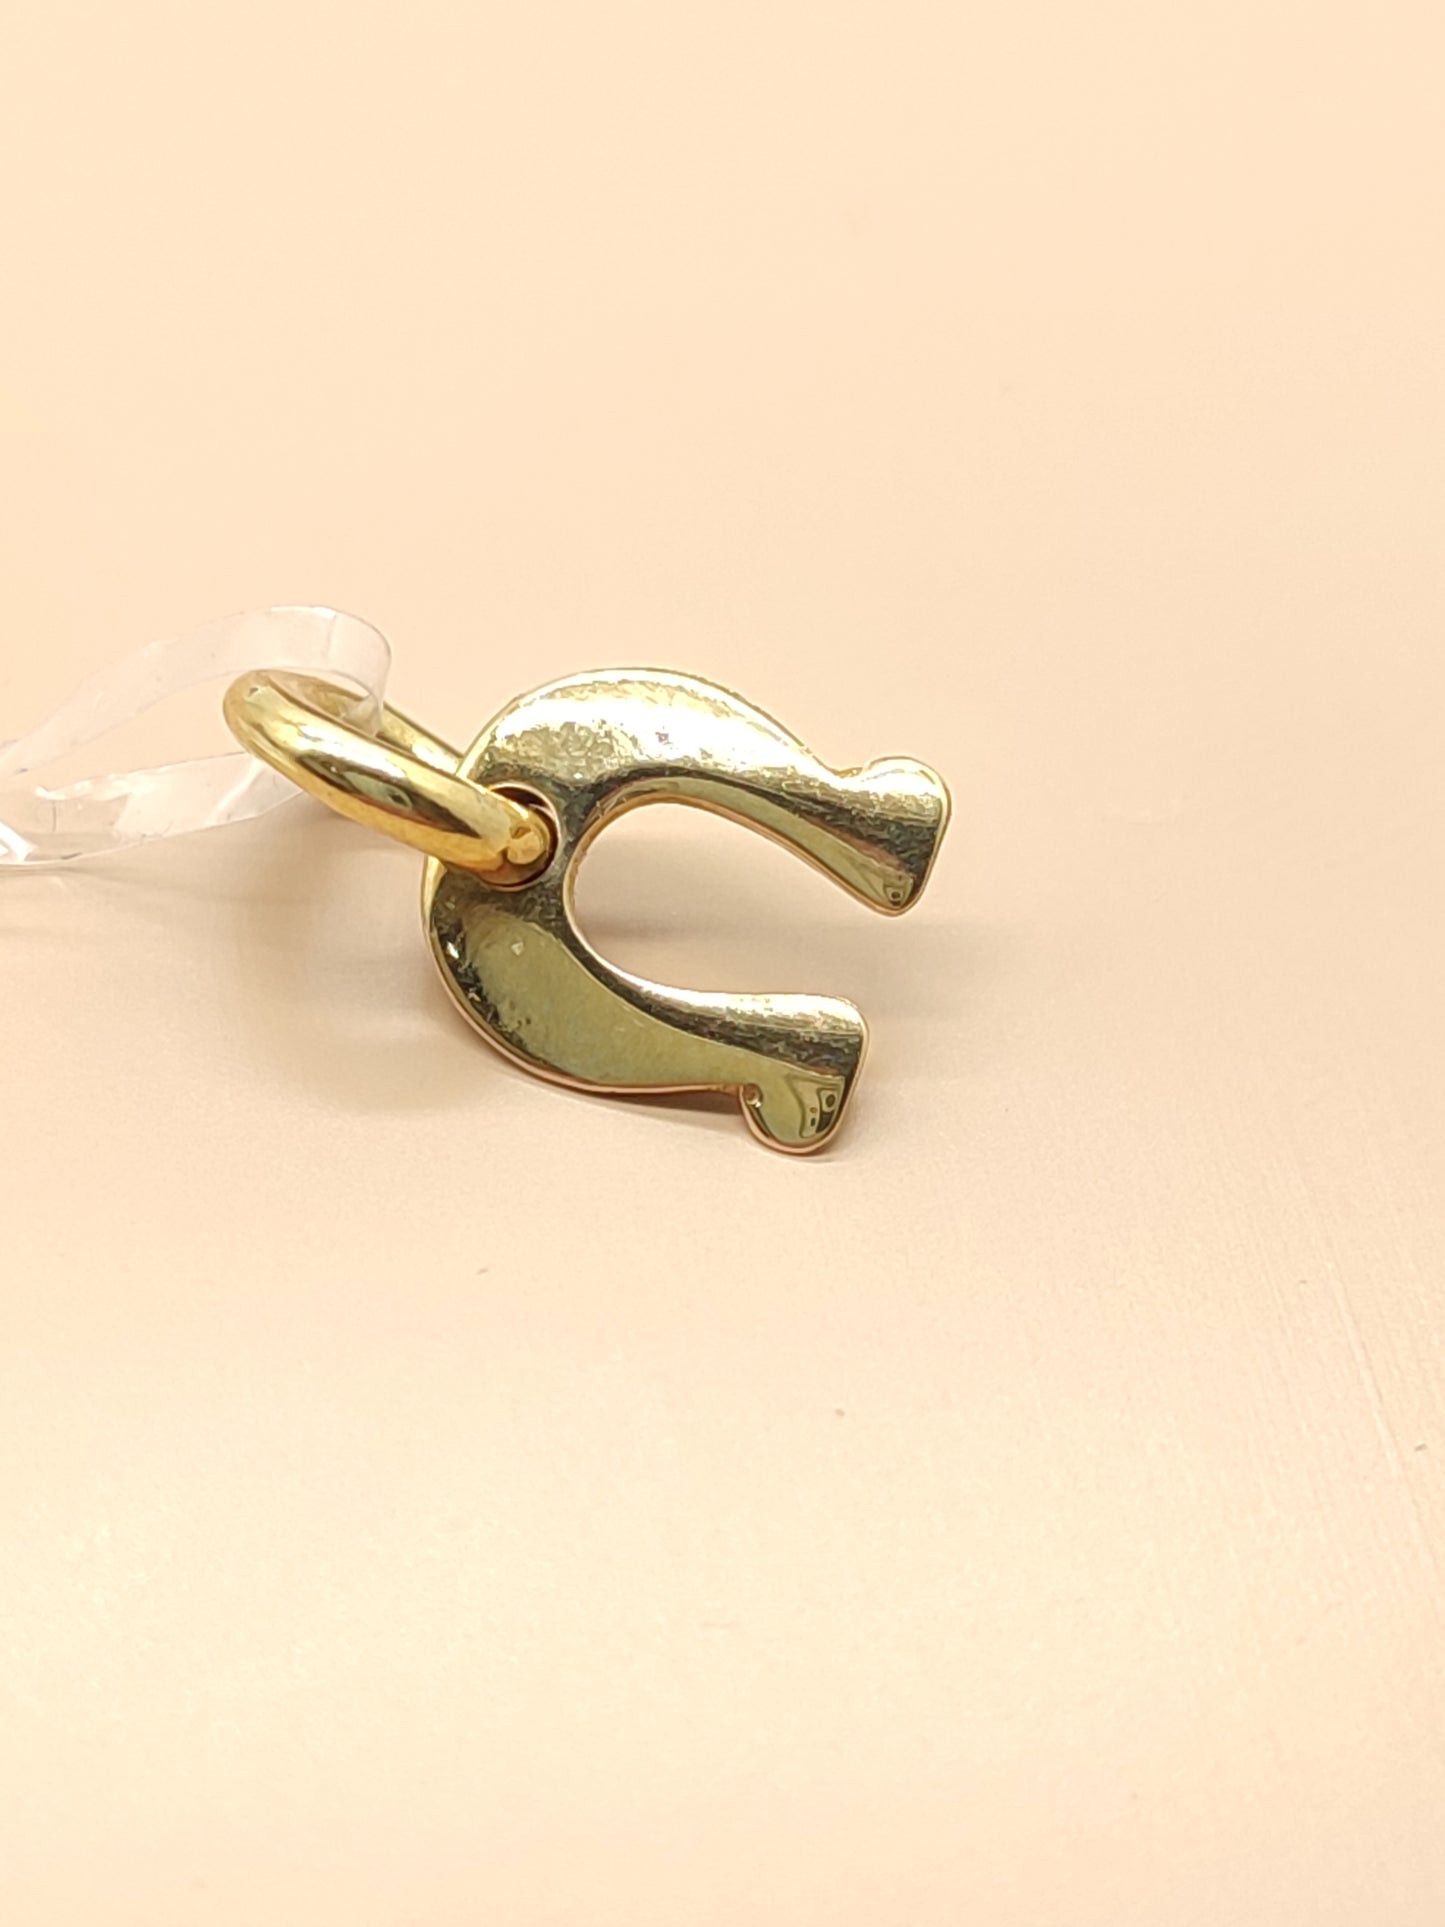 Horseshoe pendant in gold